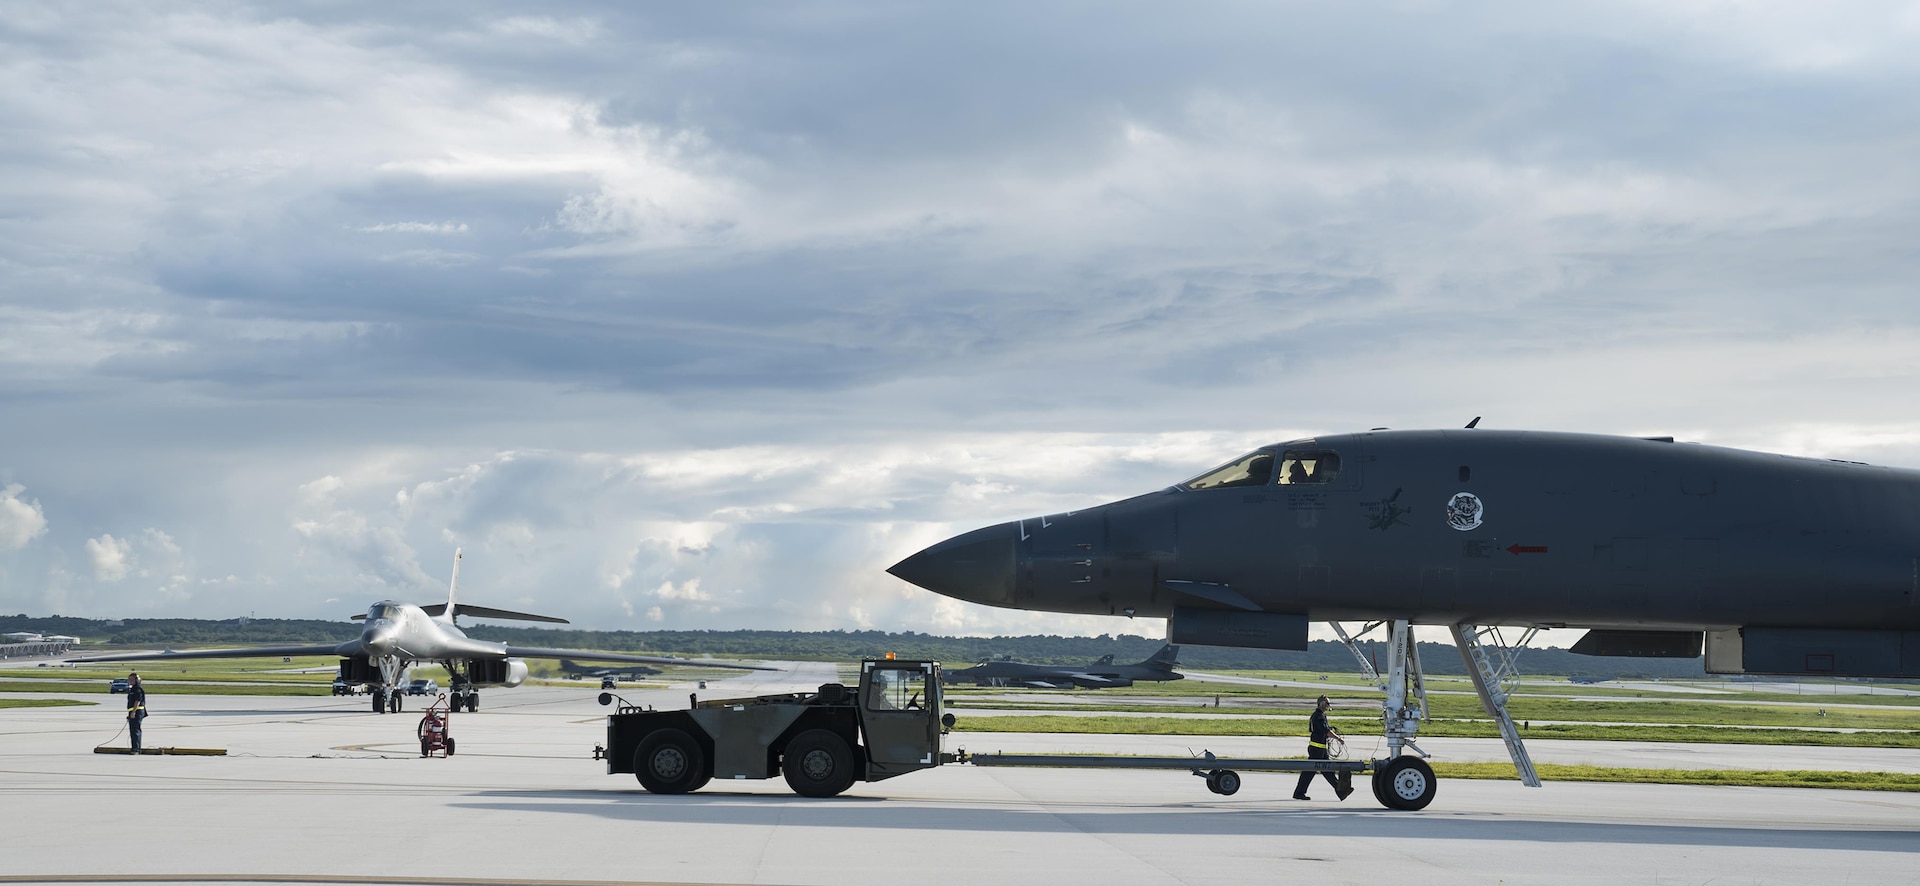 B-1s assume bomber operations on Guam